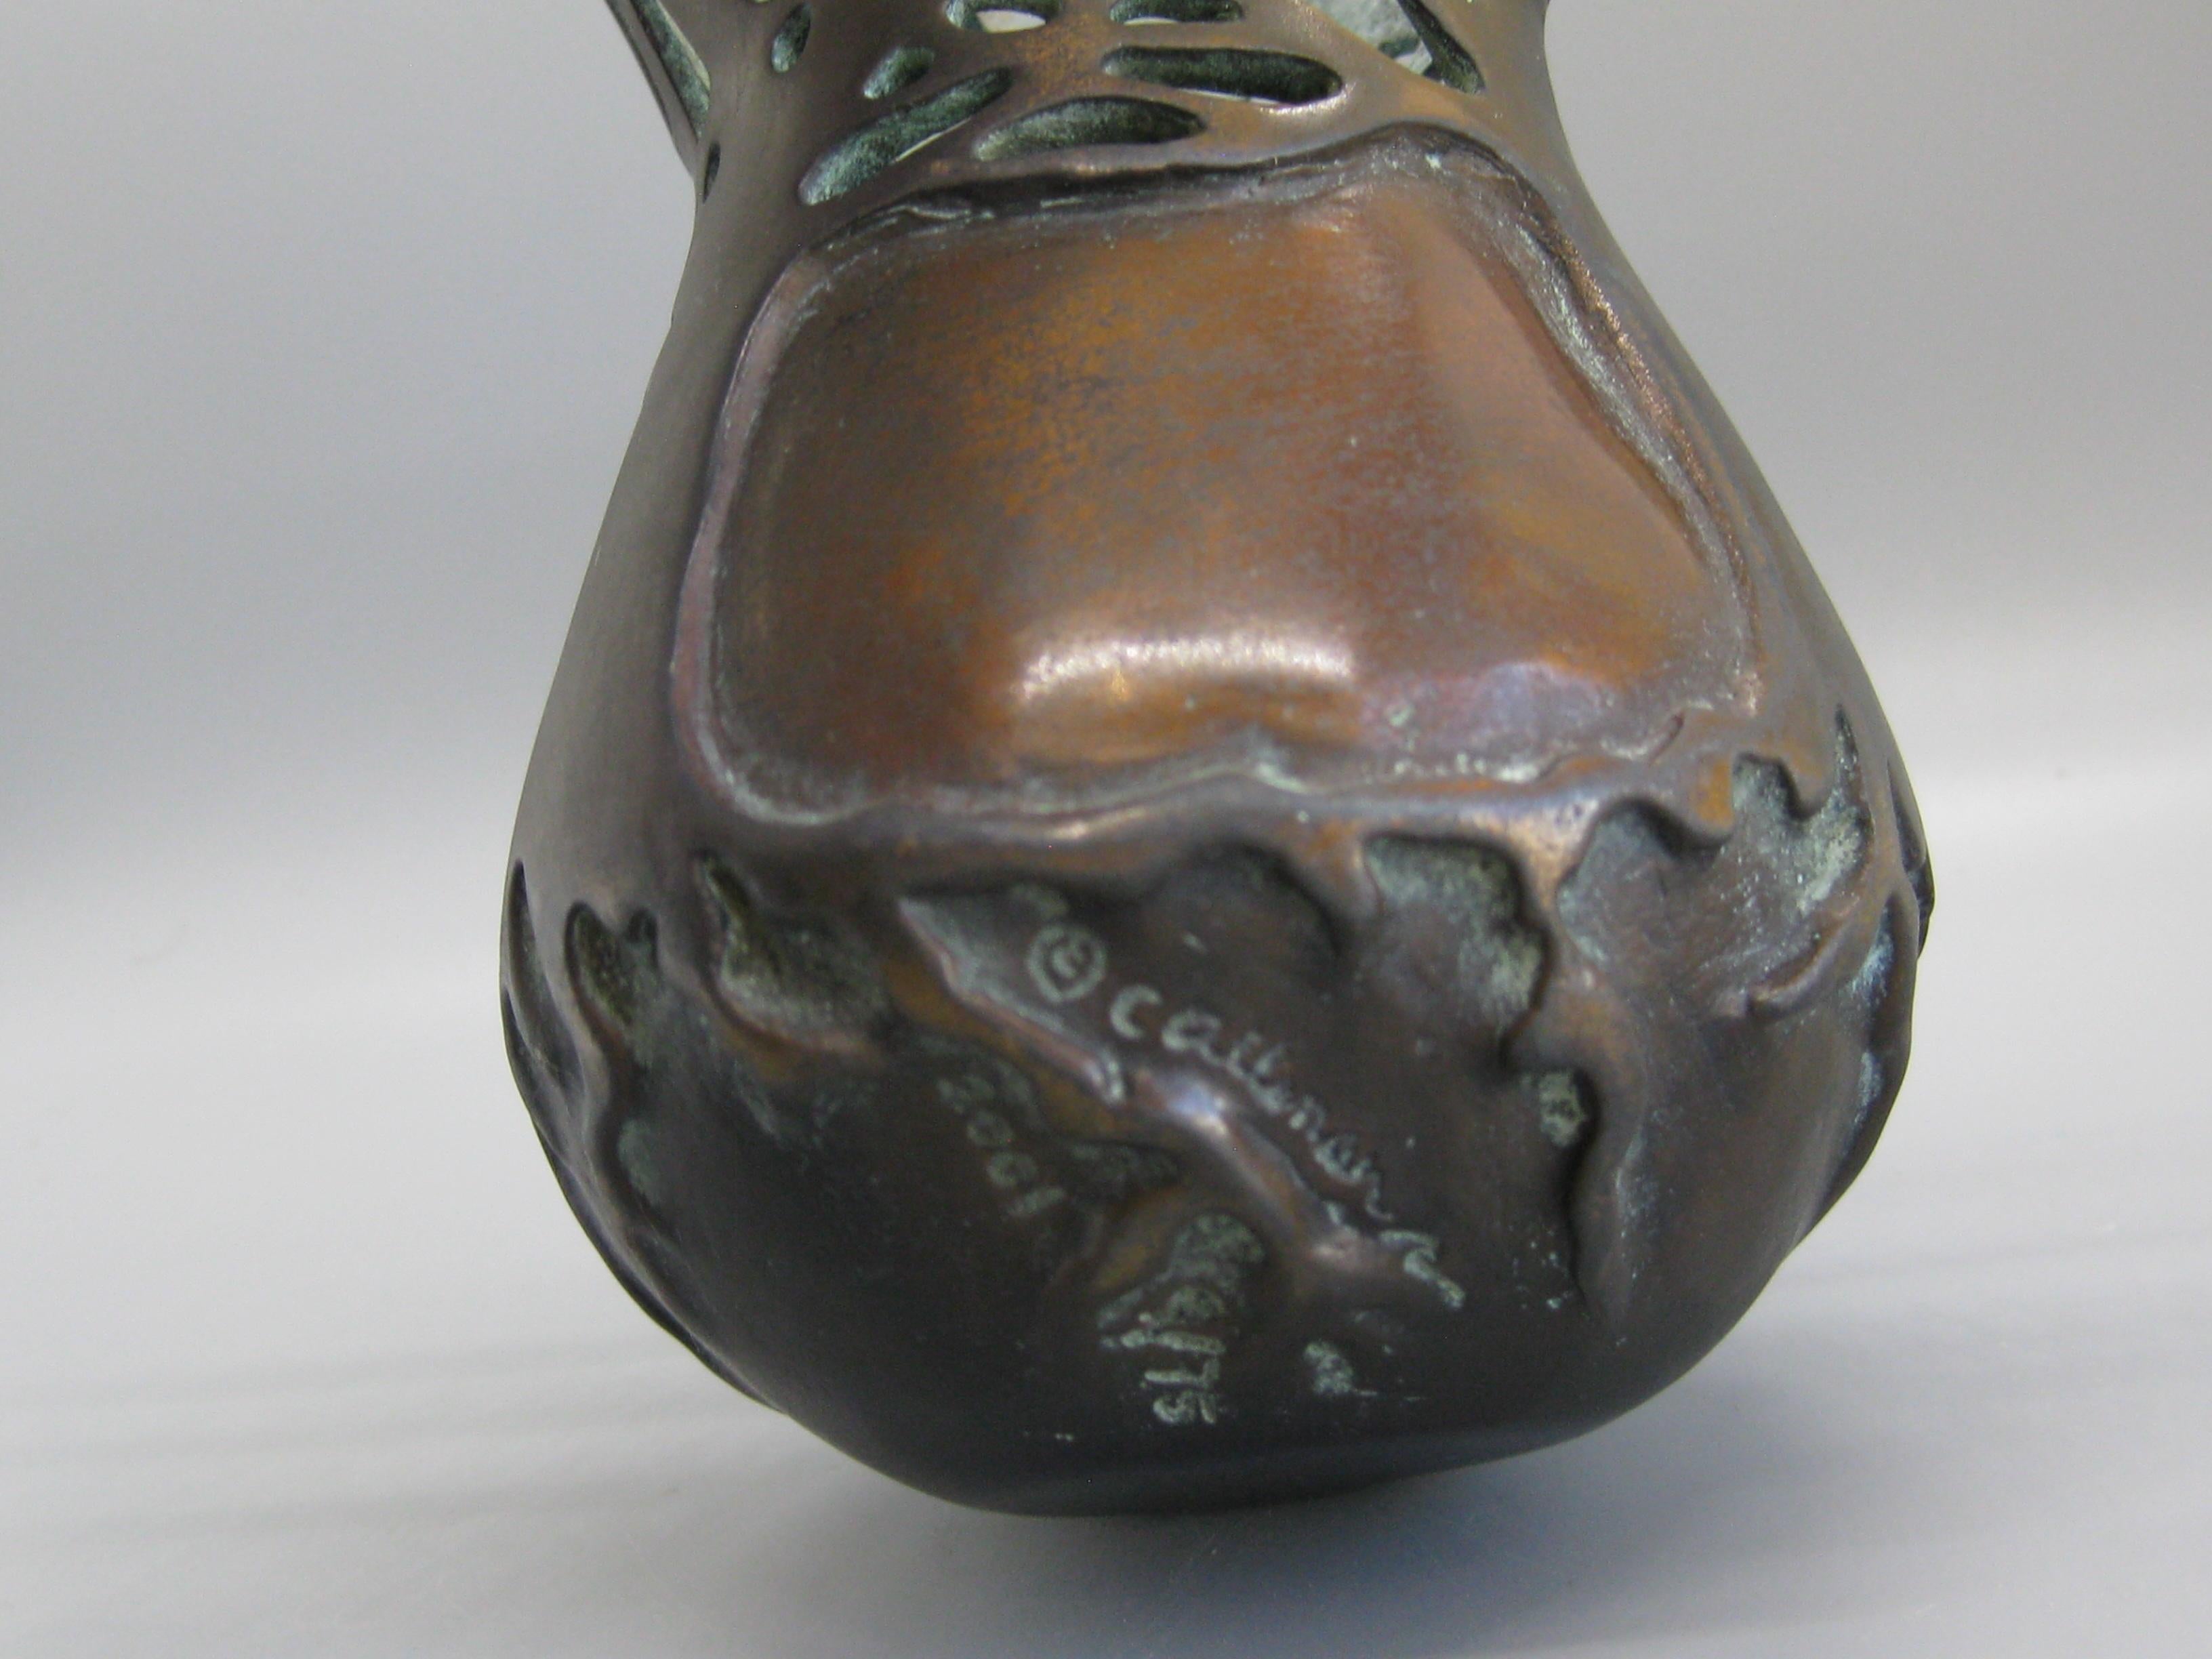 2001 Carol Alleman Organic Midcentury Bronze Vase Vessel Sculpture Limited 75 For Sale 10